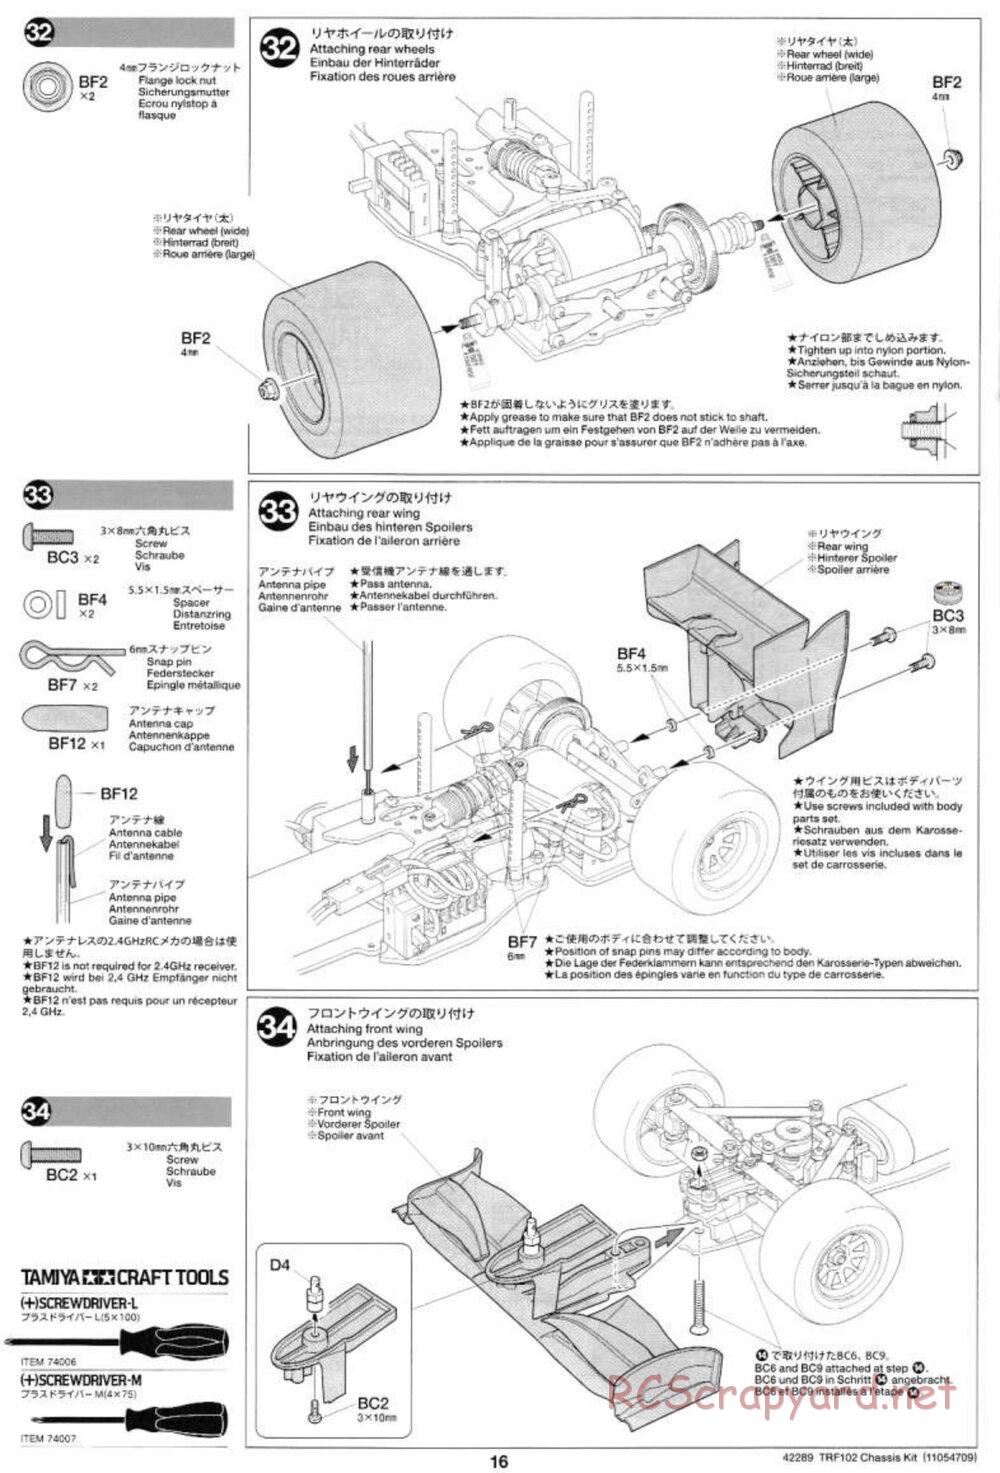 Tamiya - TRF102 Chassis - Manual - Page 16